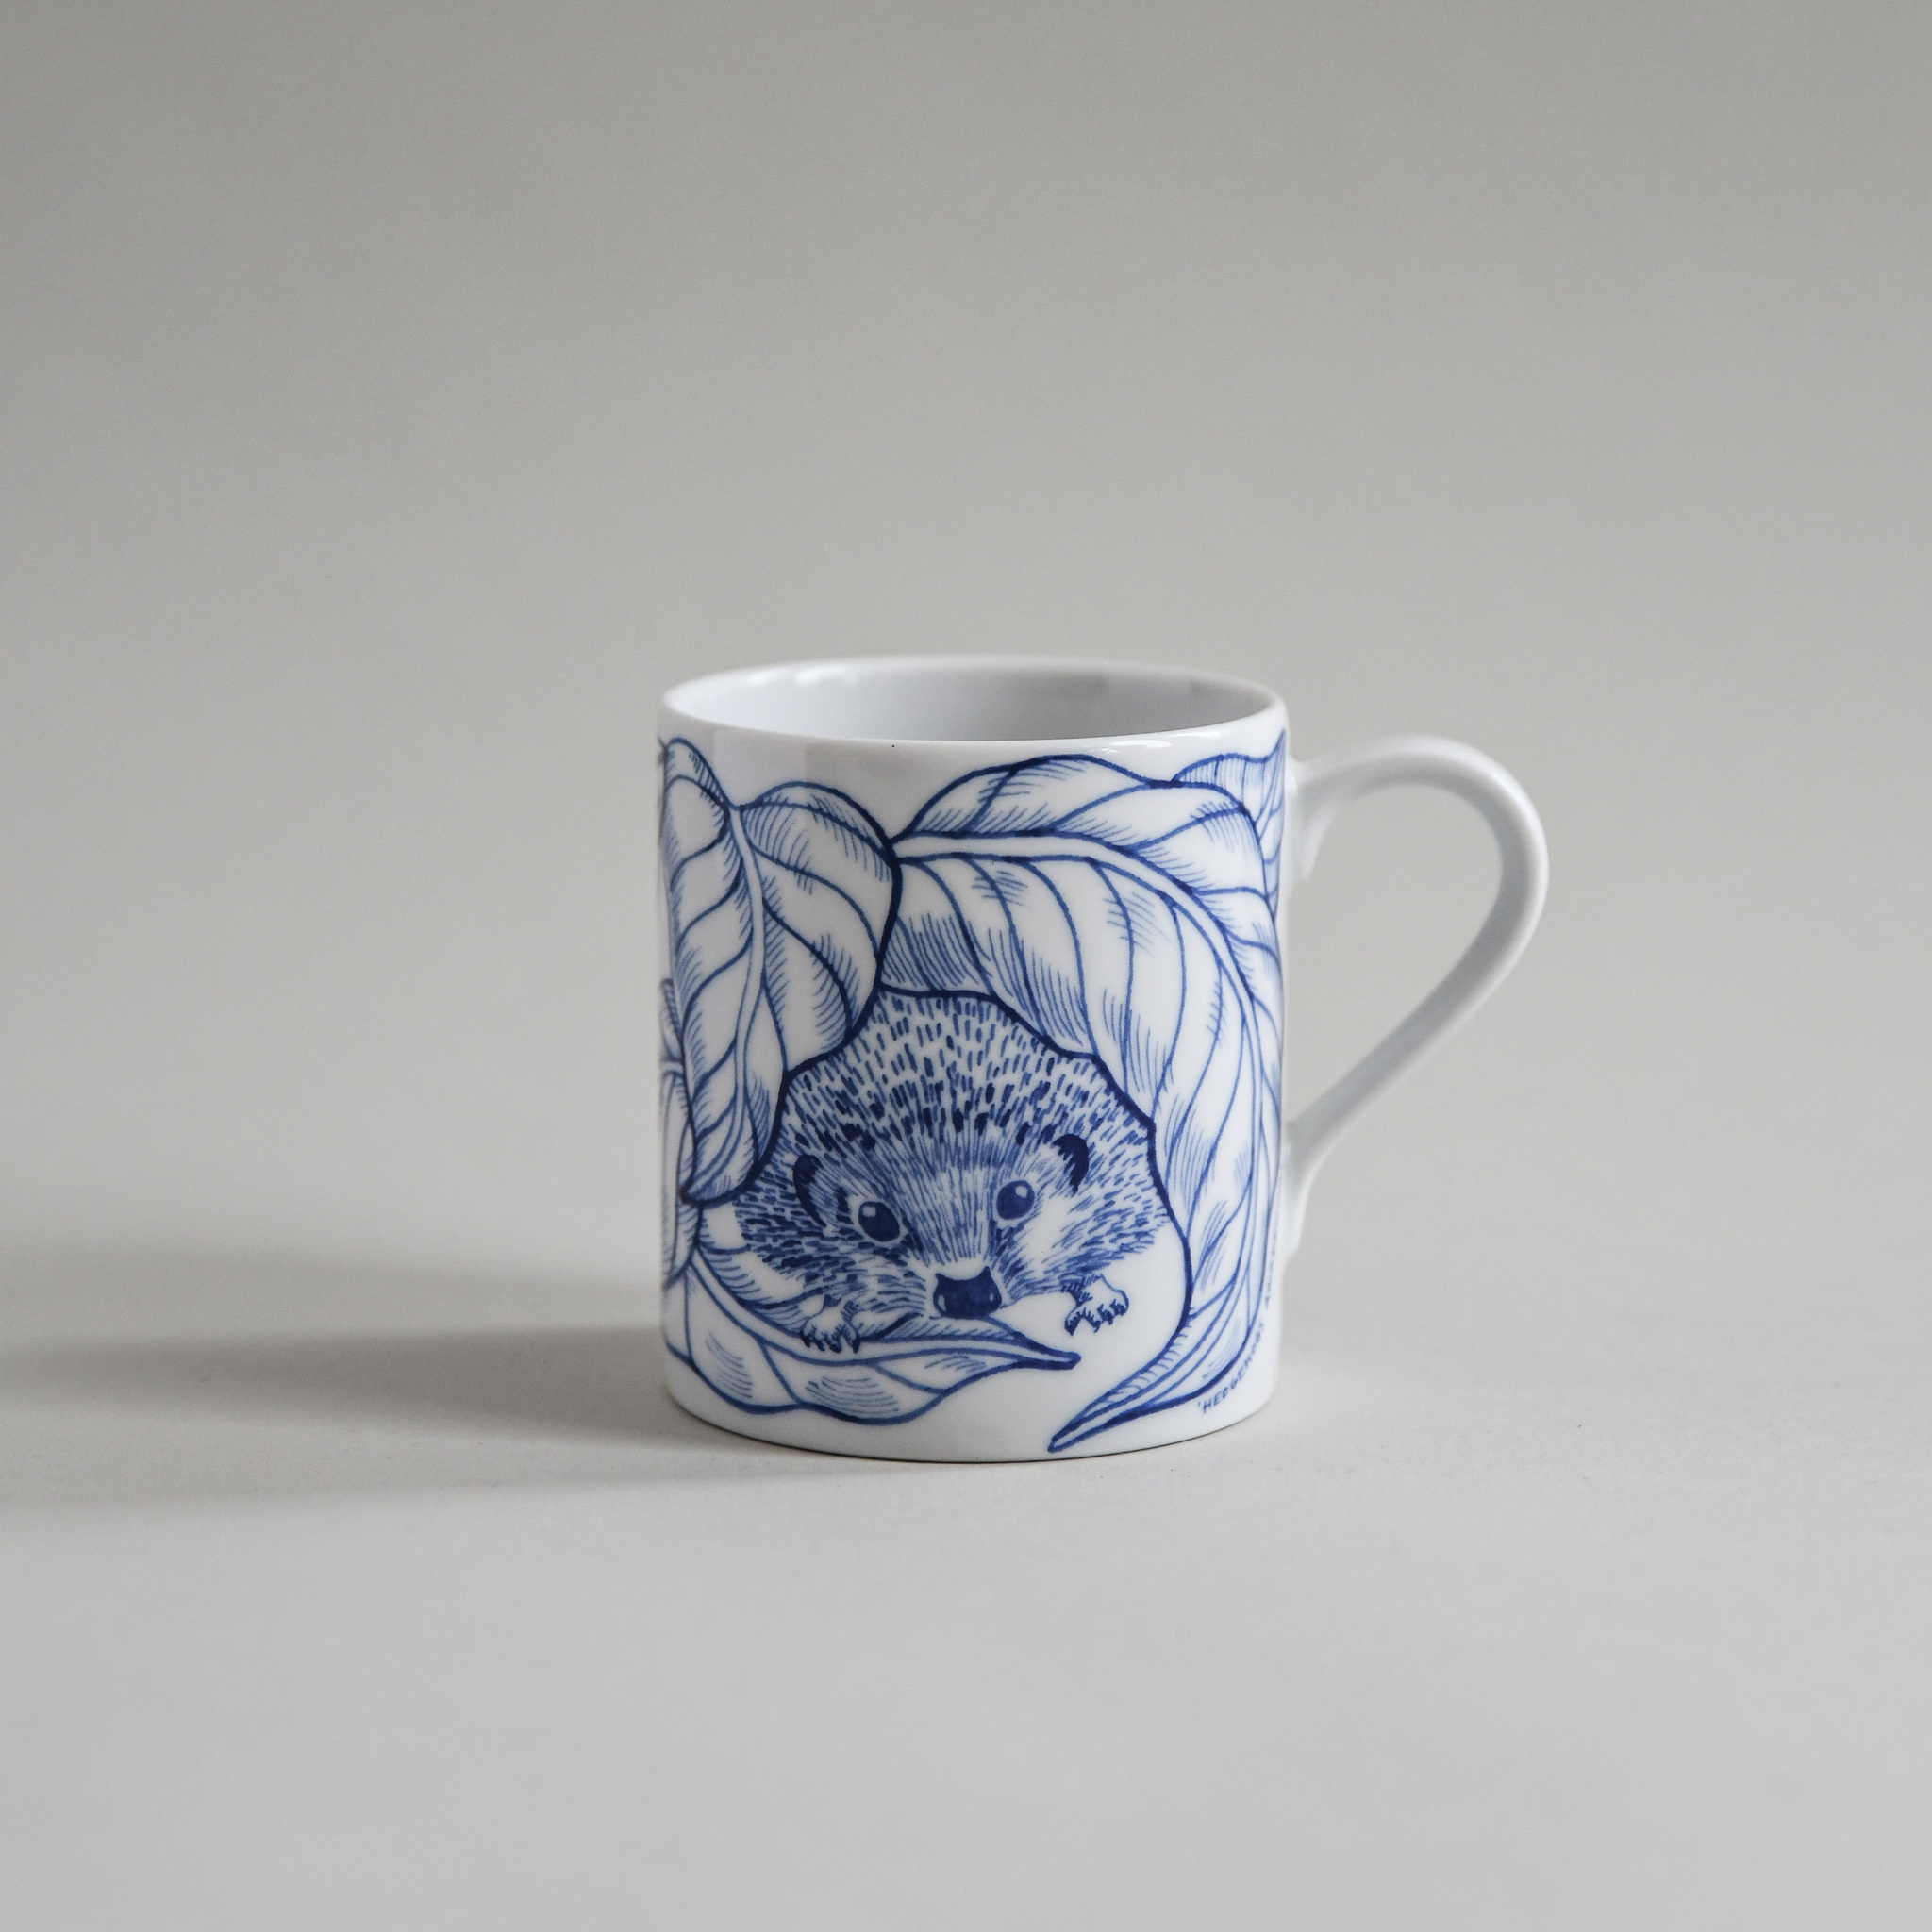 Hedgehogs awakening mug blue